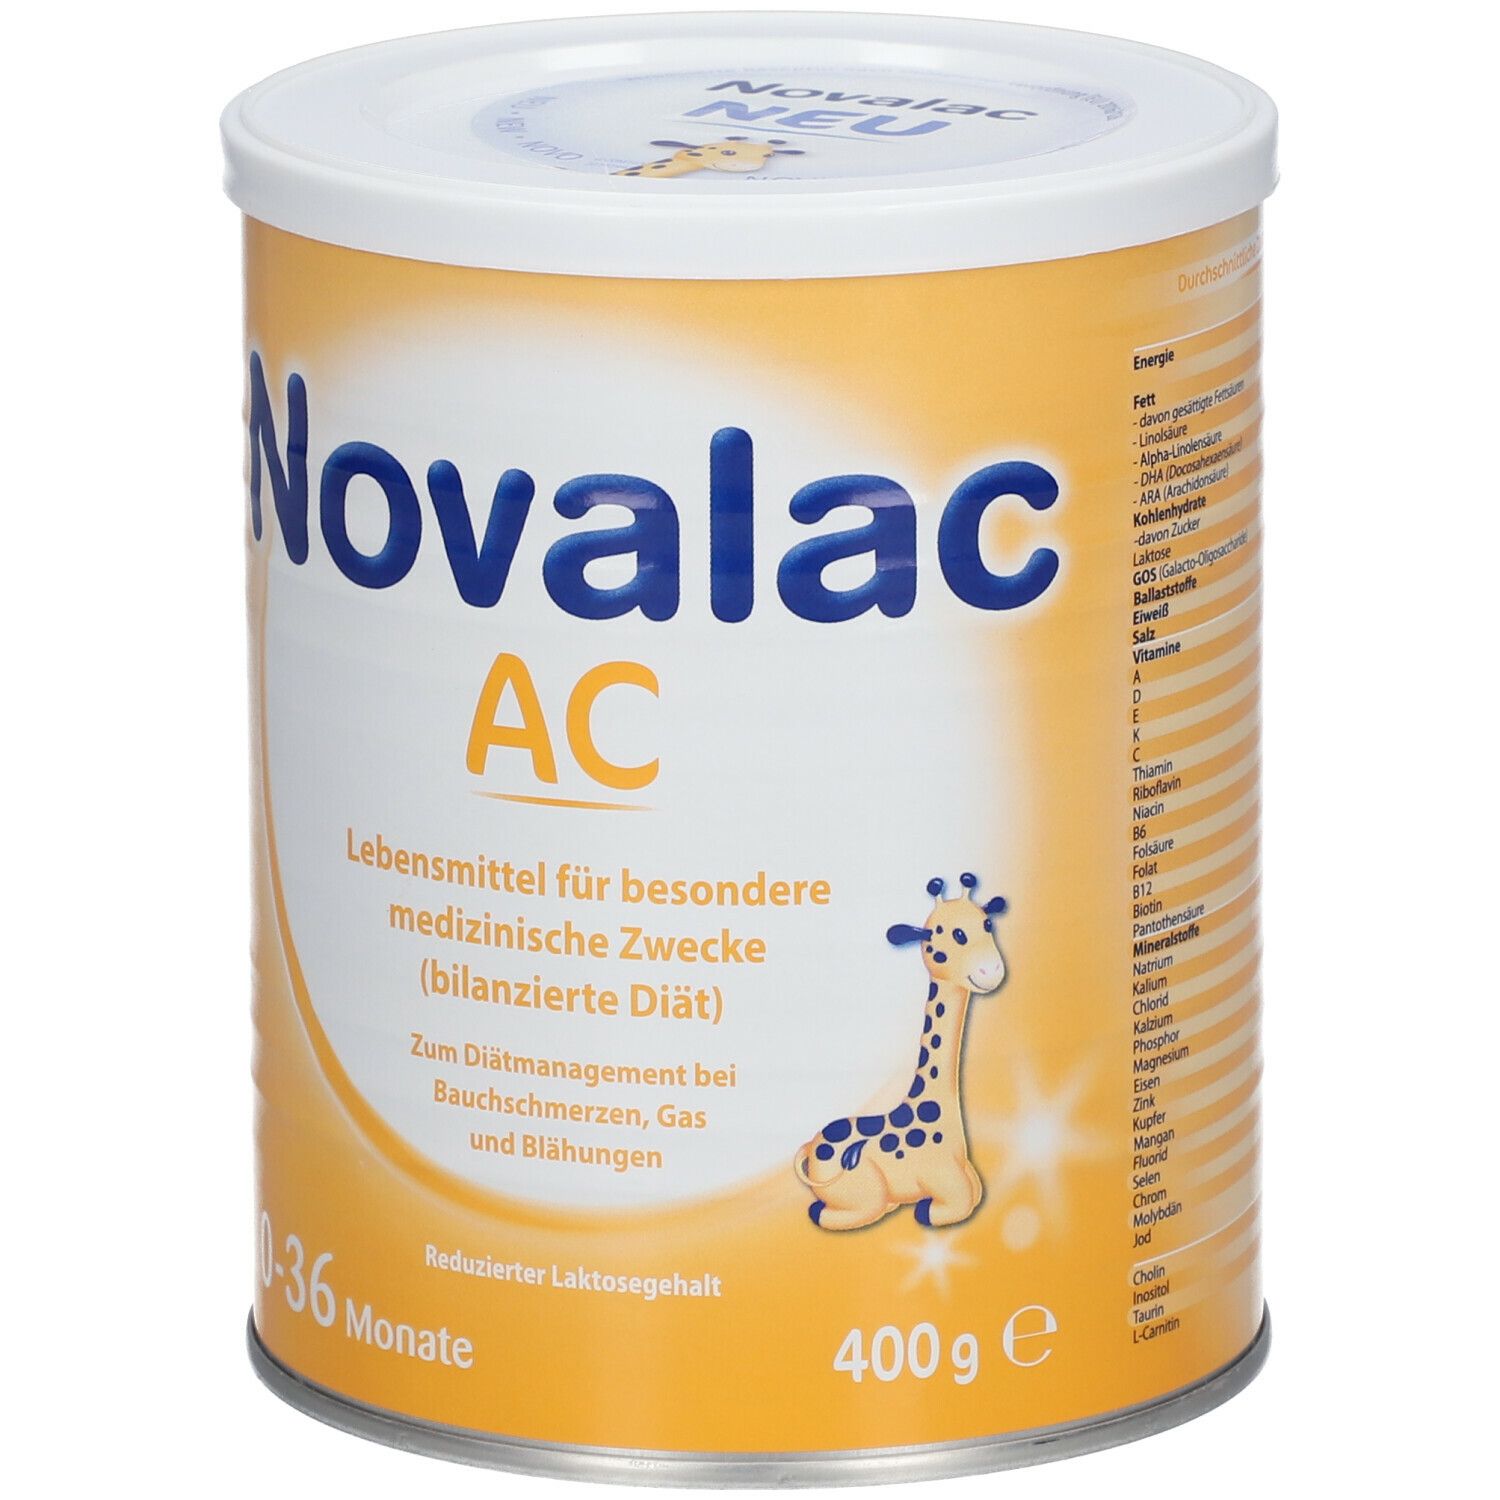 Novalac AC Spezialnahrung von Geburt an